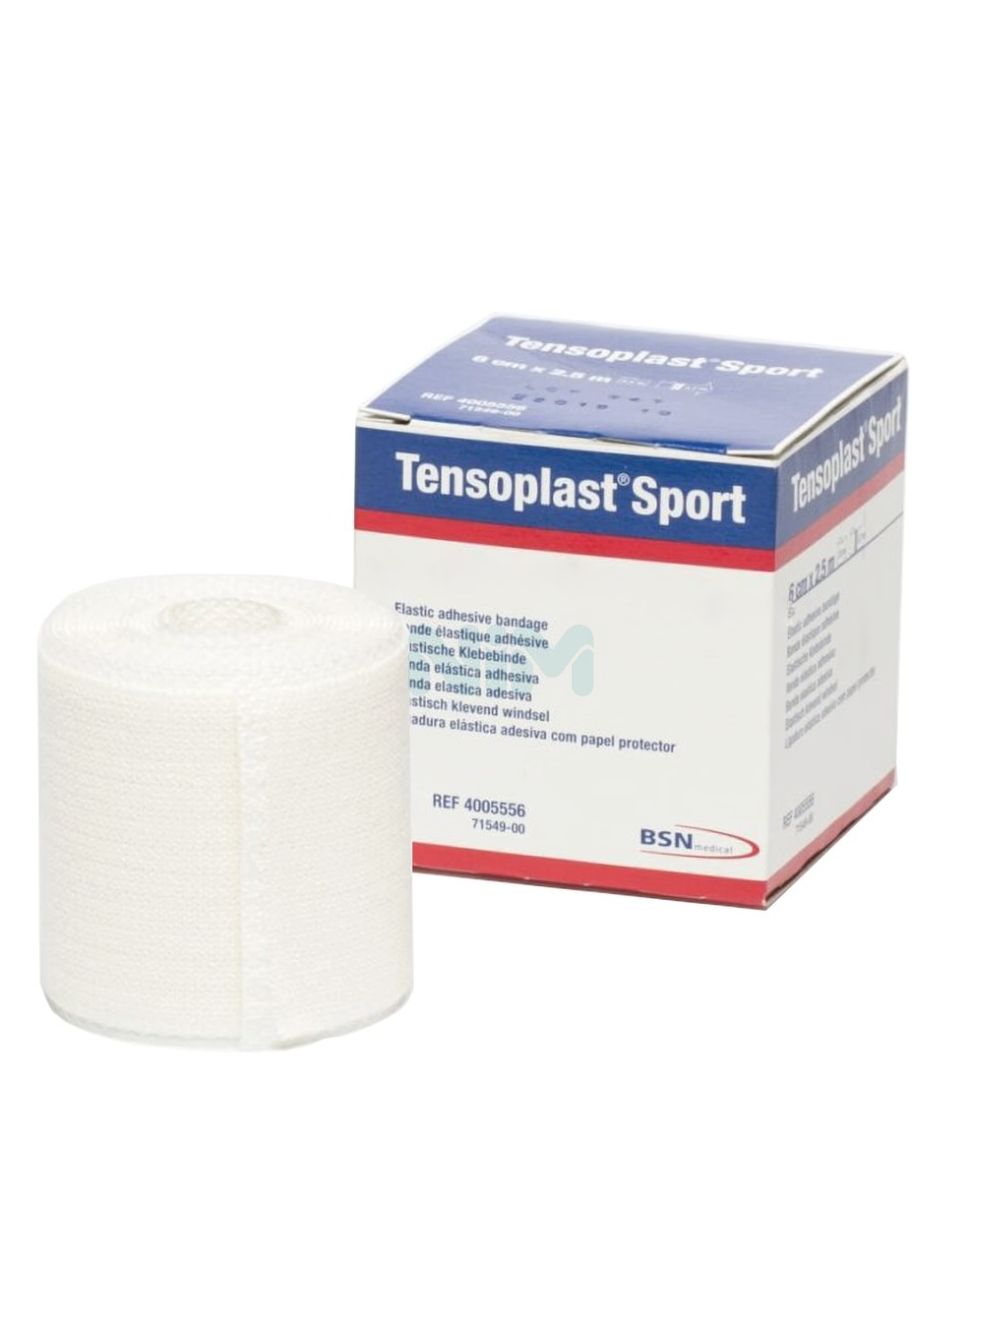 Tensoplast Sport Benda elastica adesiva ipoallergenica con protettore